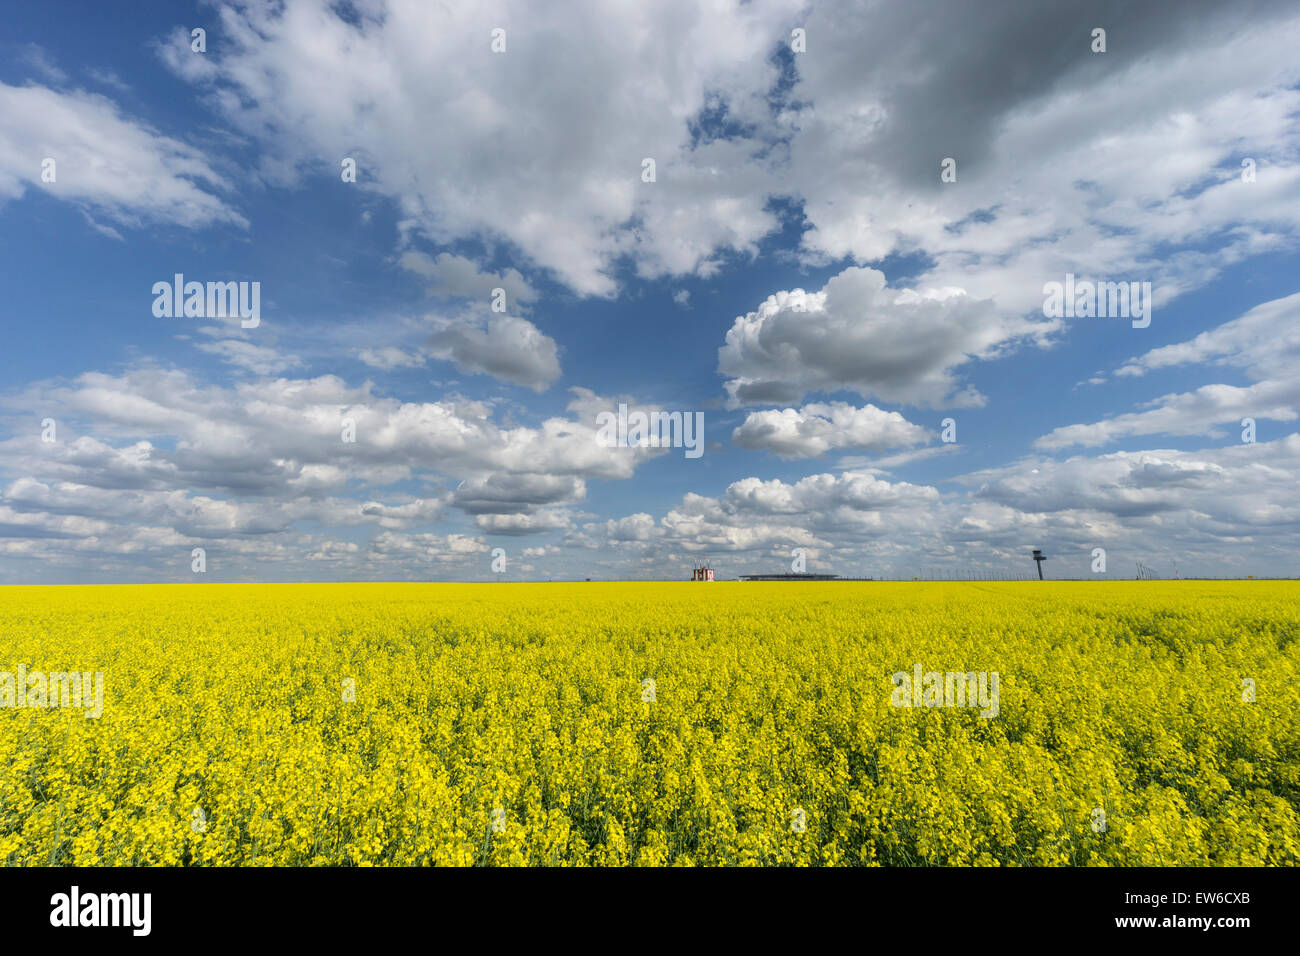 Blooming Cornfield in Front of BER Airport , Clouds, Berlin Schoenefeld Stock Photo